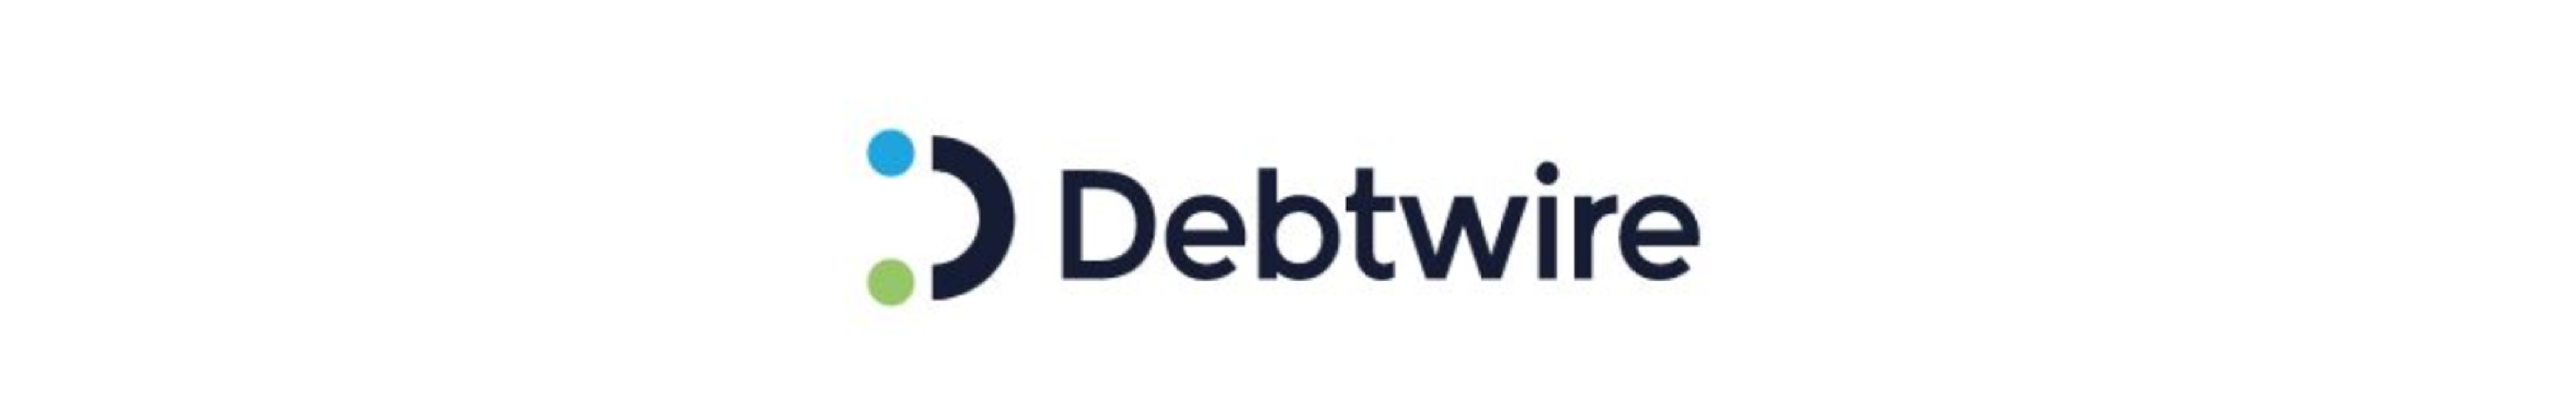 Debtwire-New-Logo image